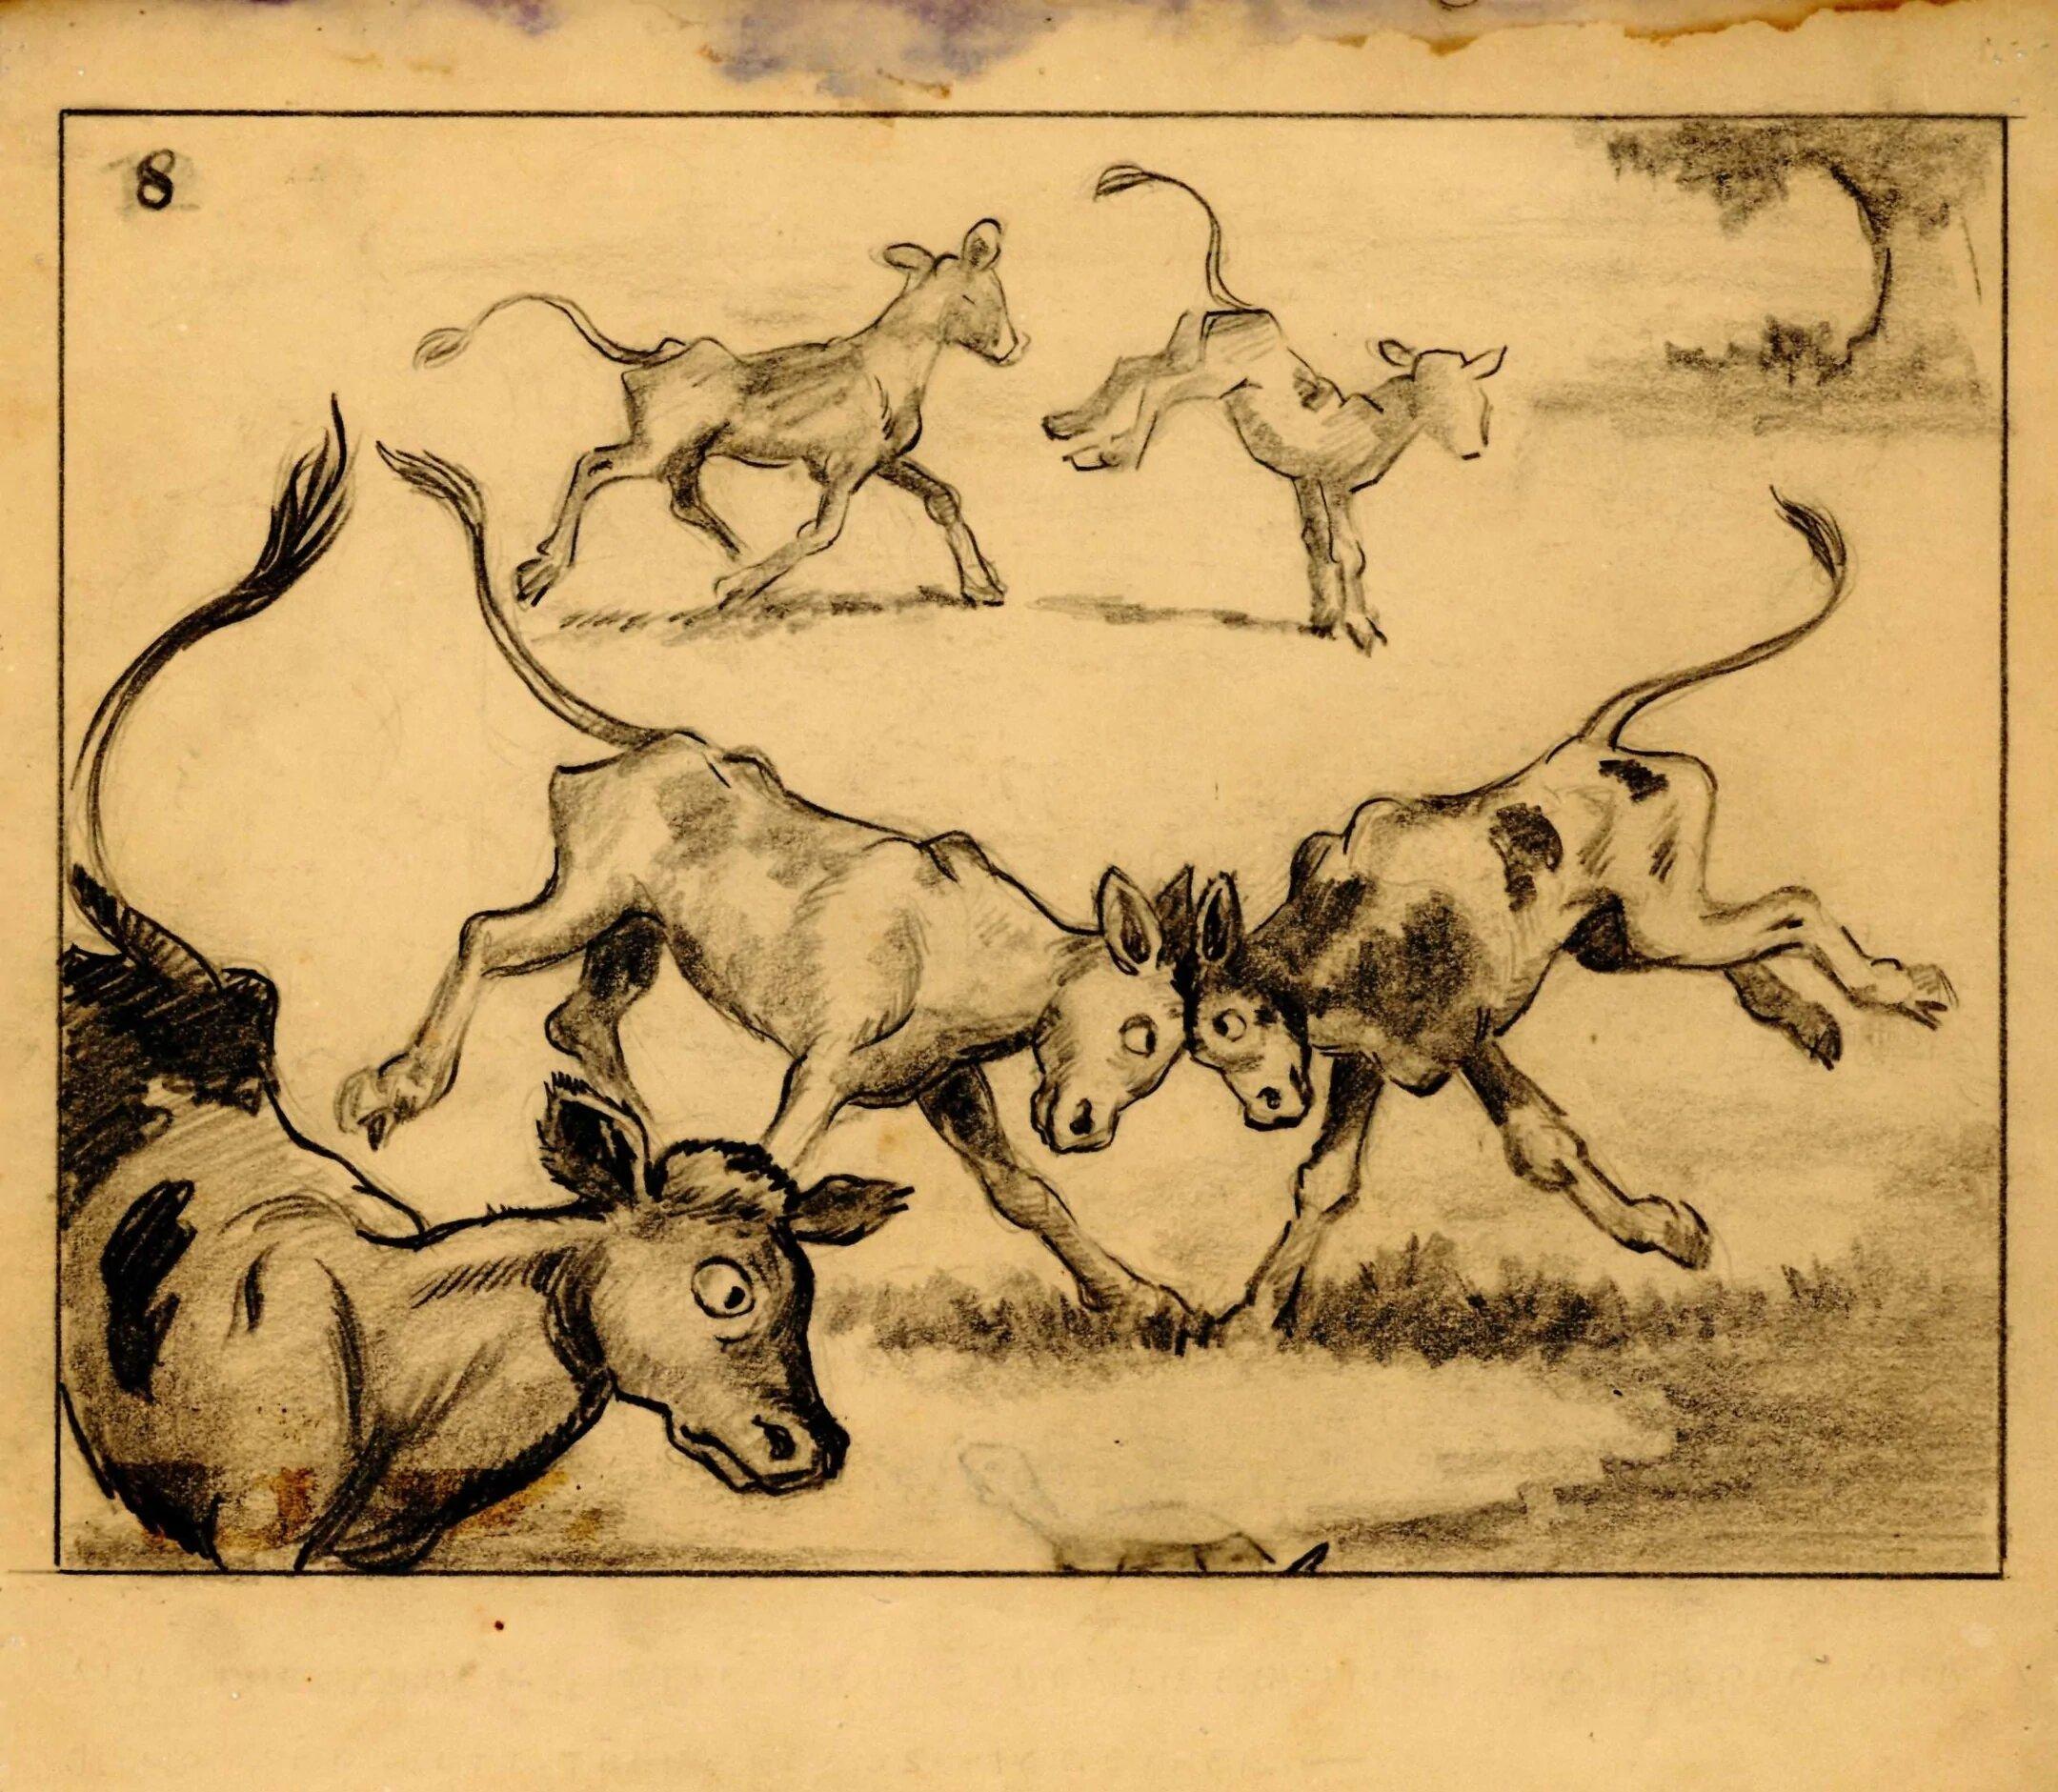 Dessin du storyboard de Ferdinand le taureau - Art de Walt Disney Studio Artists